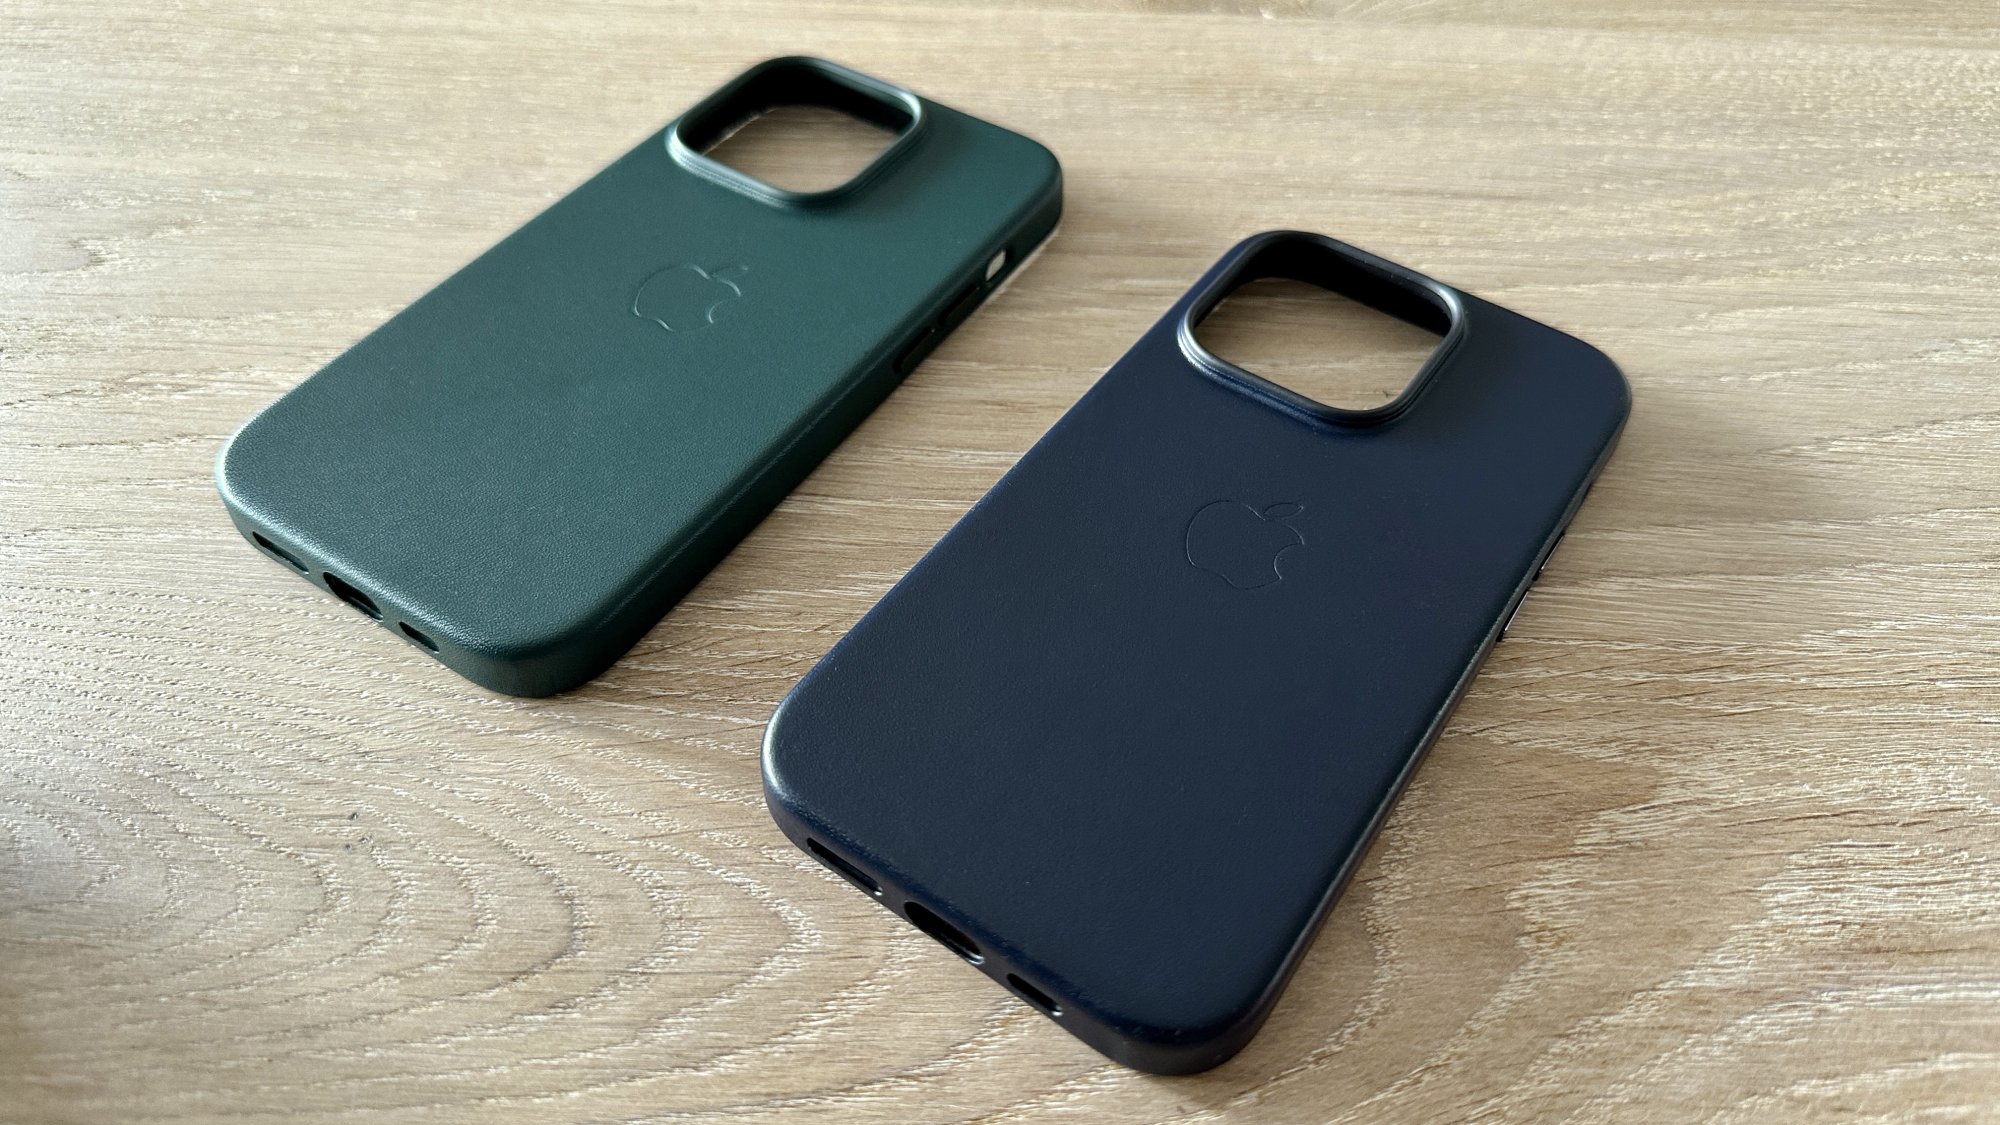 iPhone 12/Pro/Pro Max Leather case patina… - Apple Community